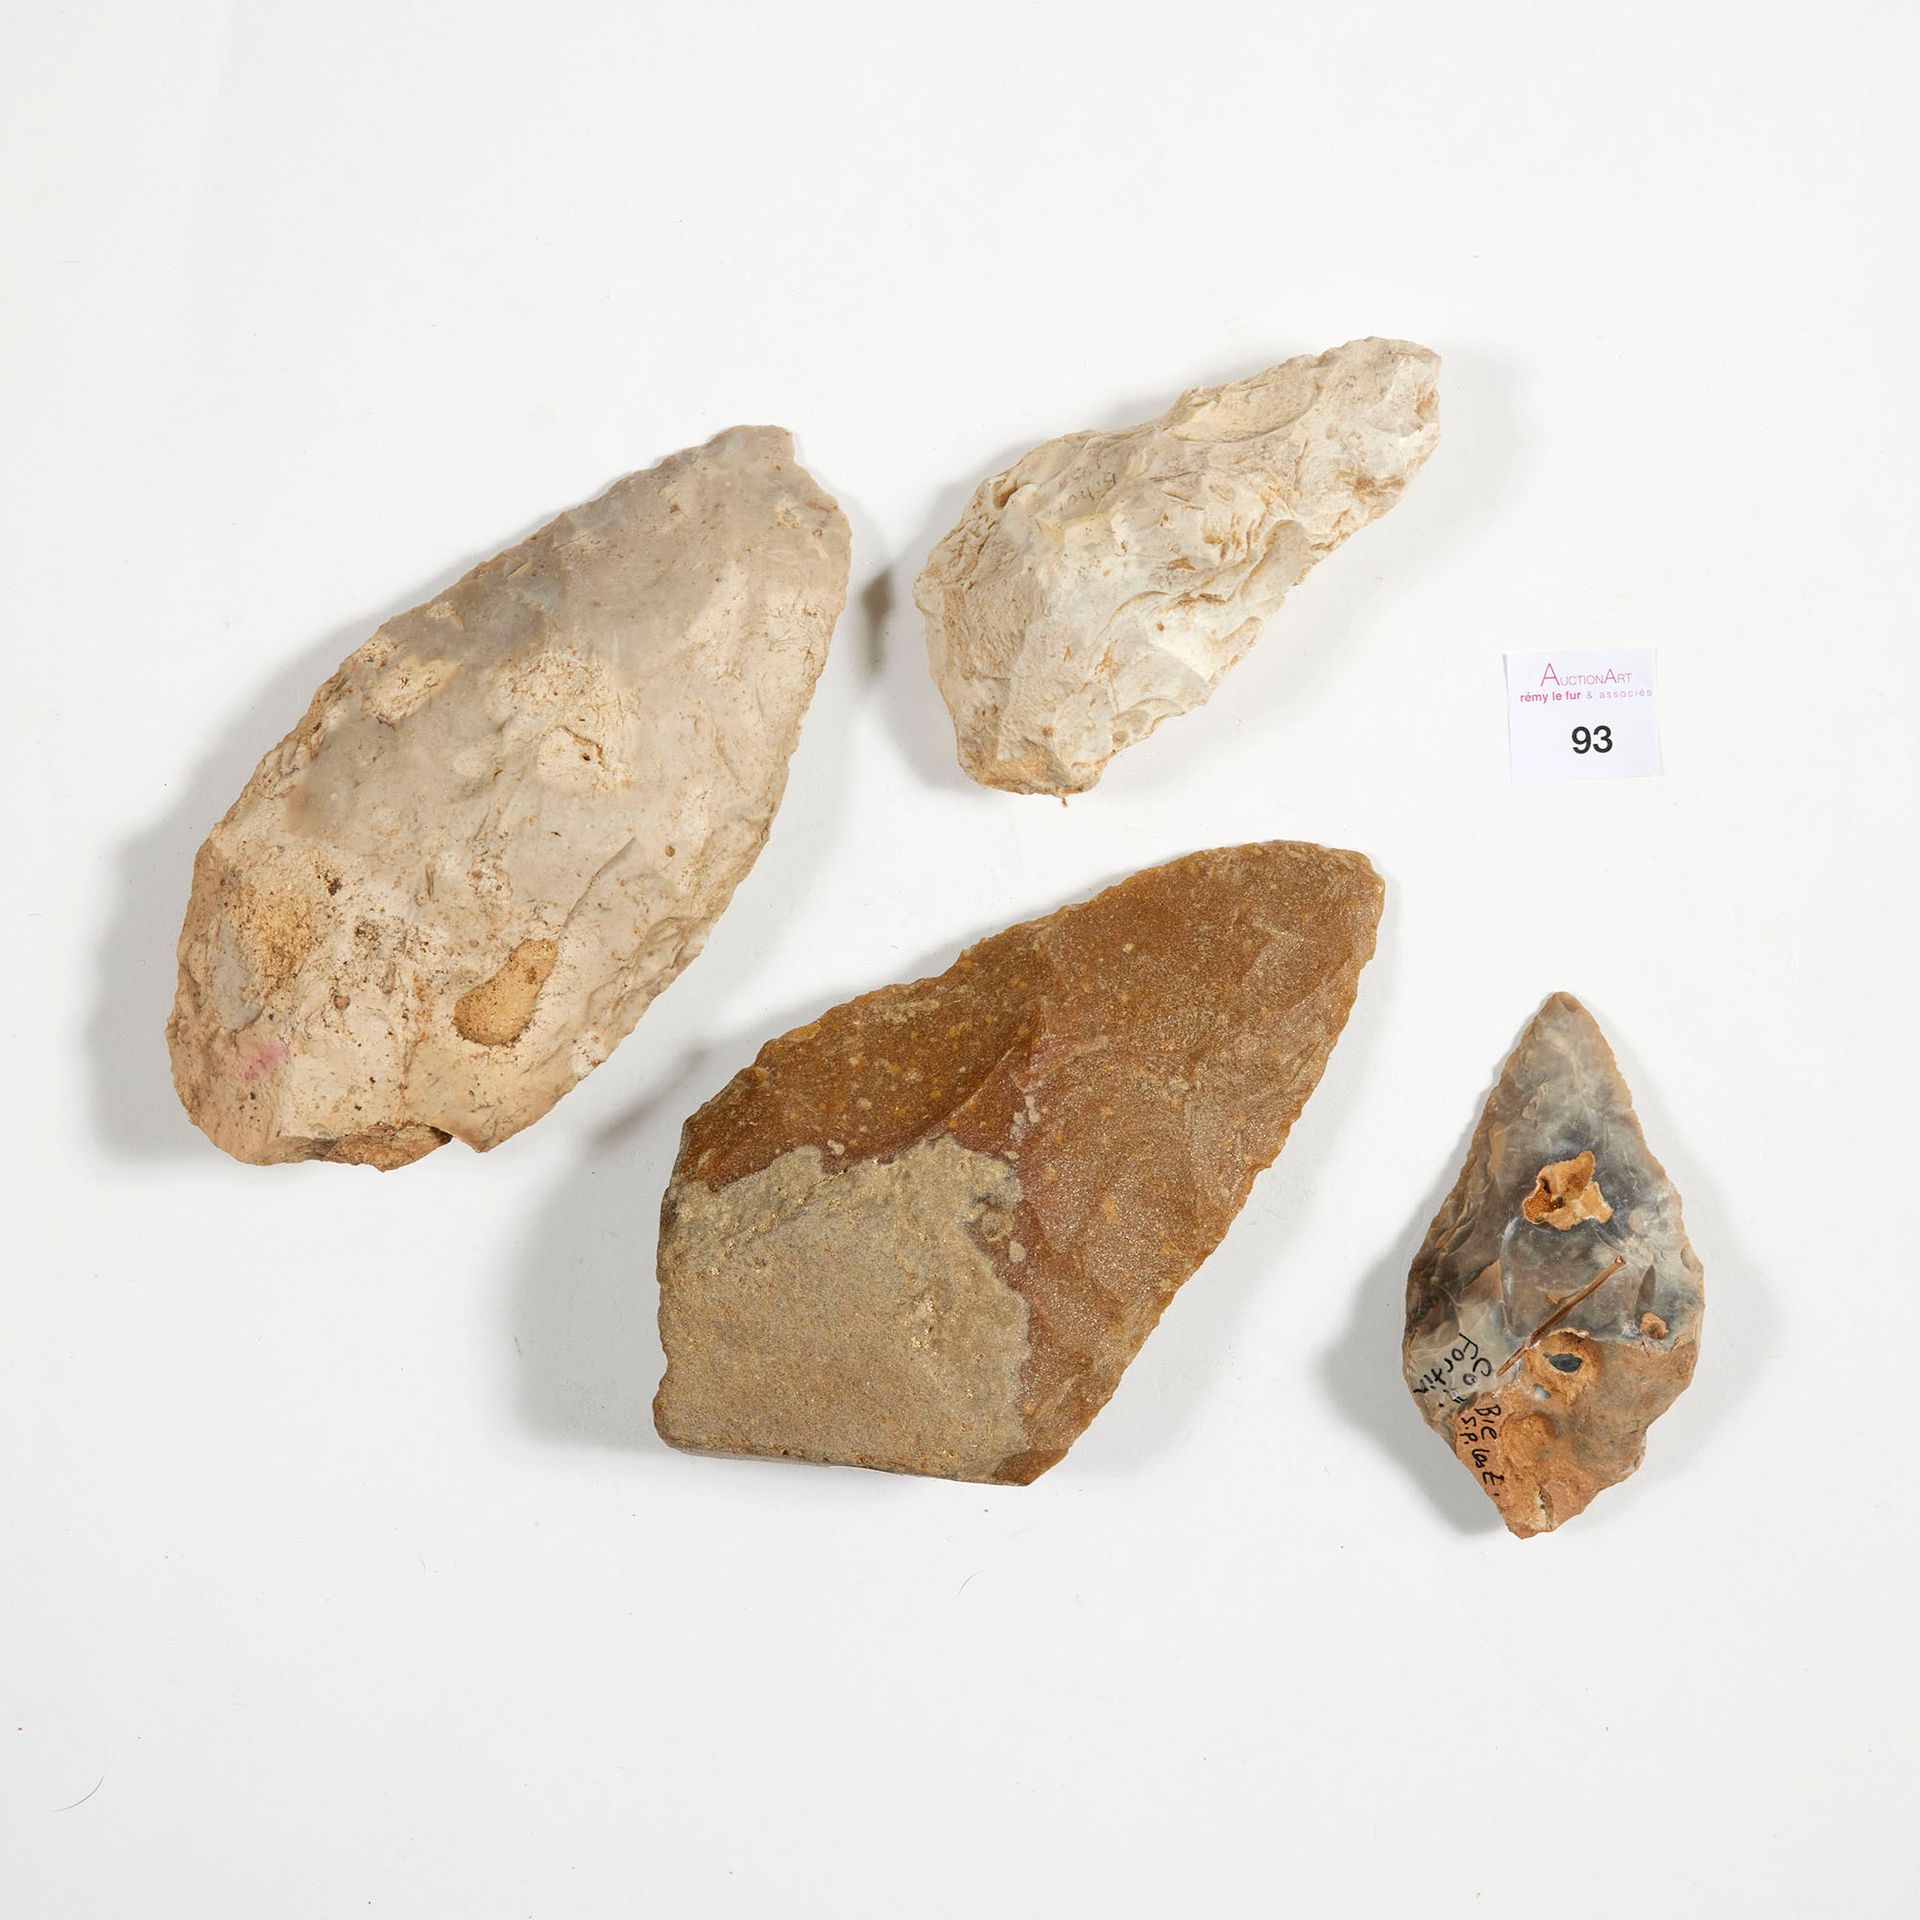 Quatre bifaces 四个裂缝

其中一个是杏仁状的。灰色的燧石和石英岩。

法国，中阿丘勒山脉。

铭文："Platt sale 1960" / "C&hellip;